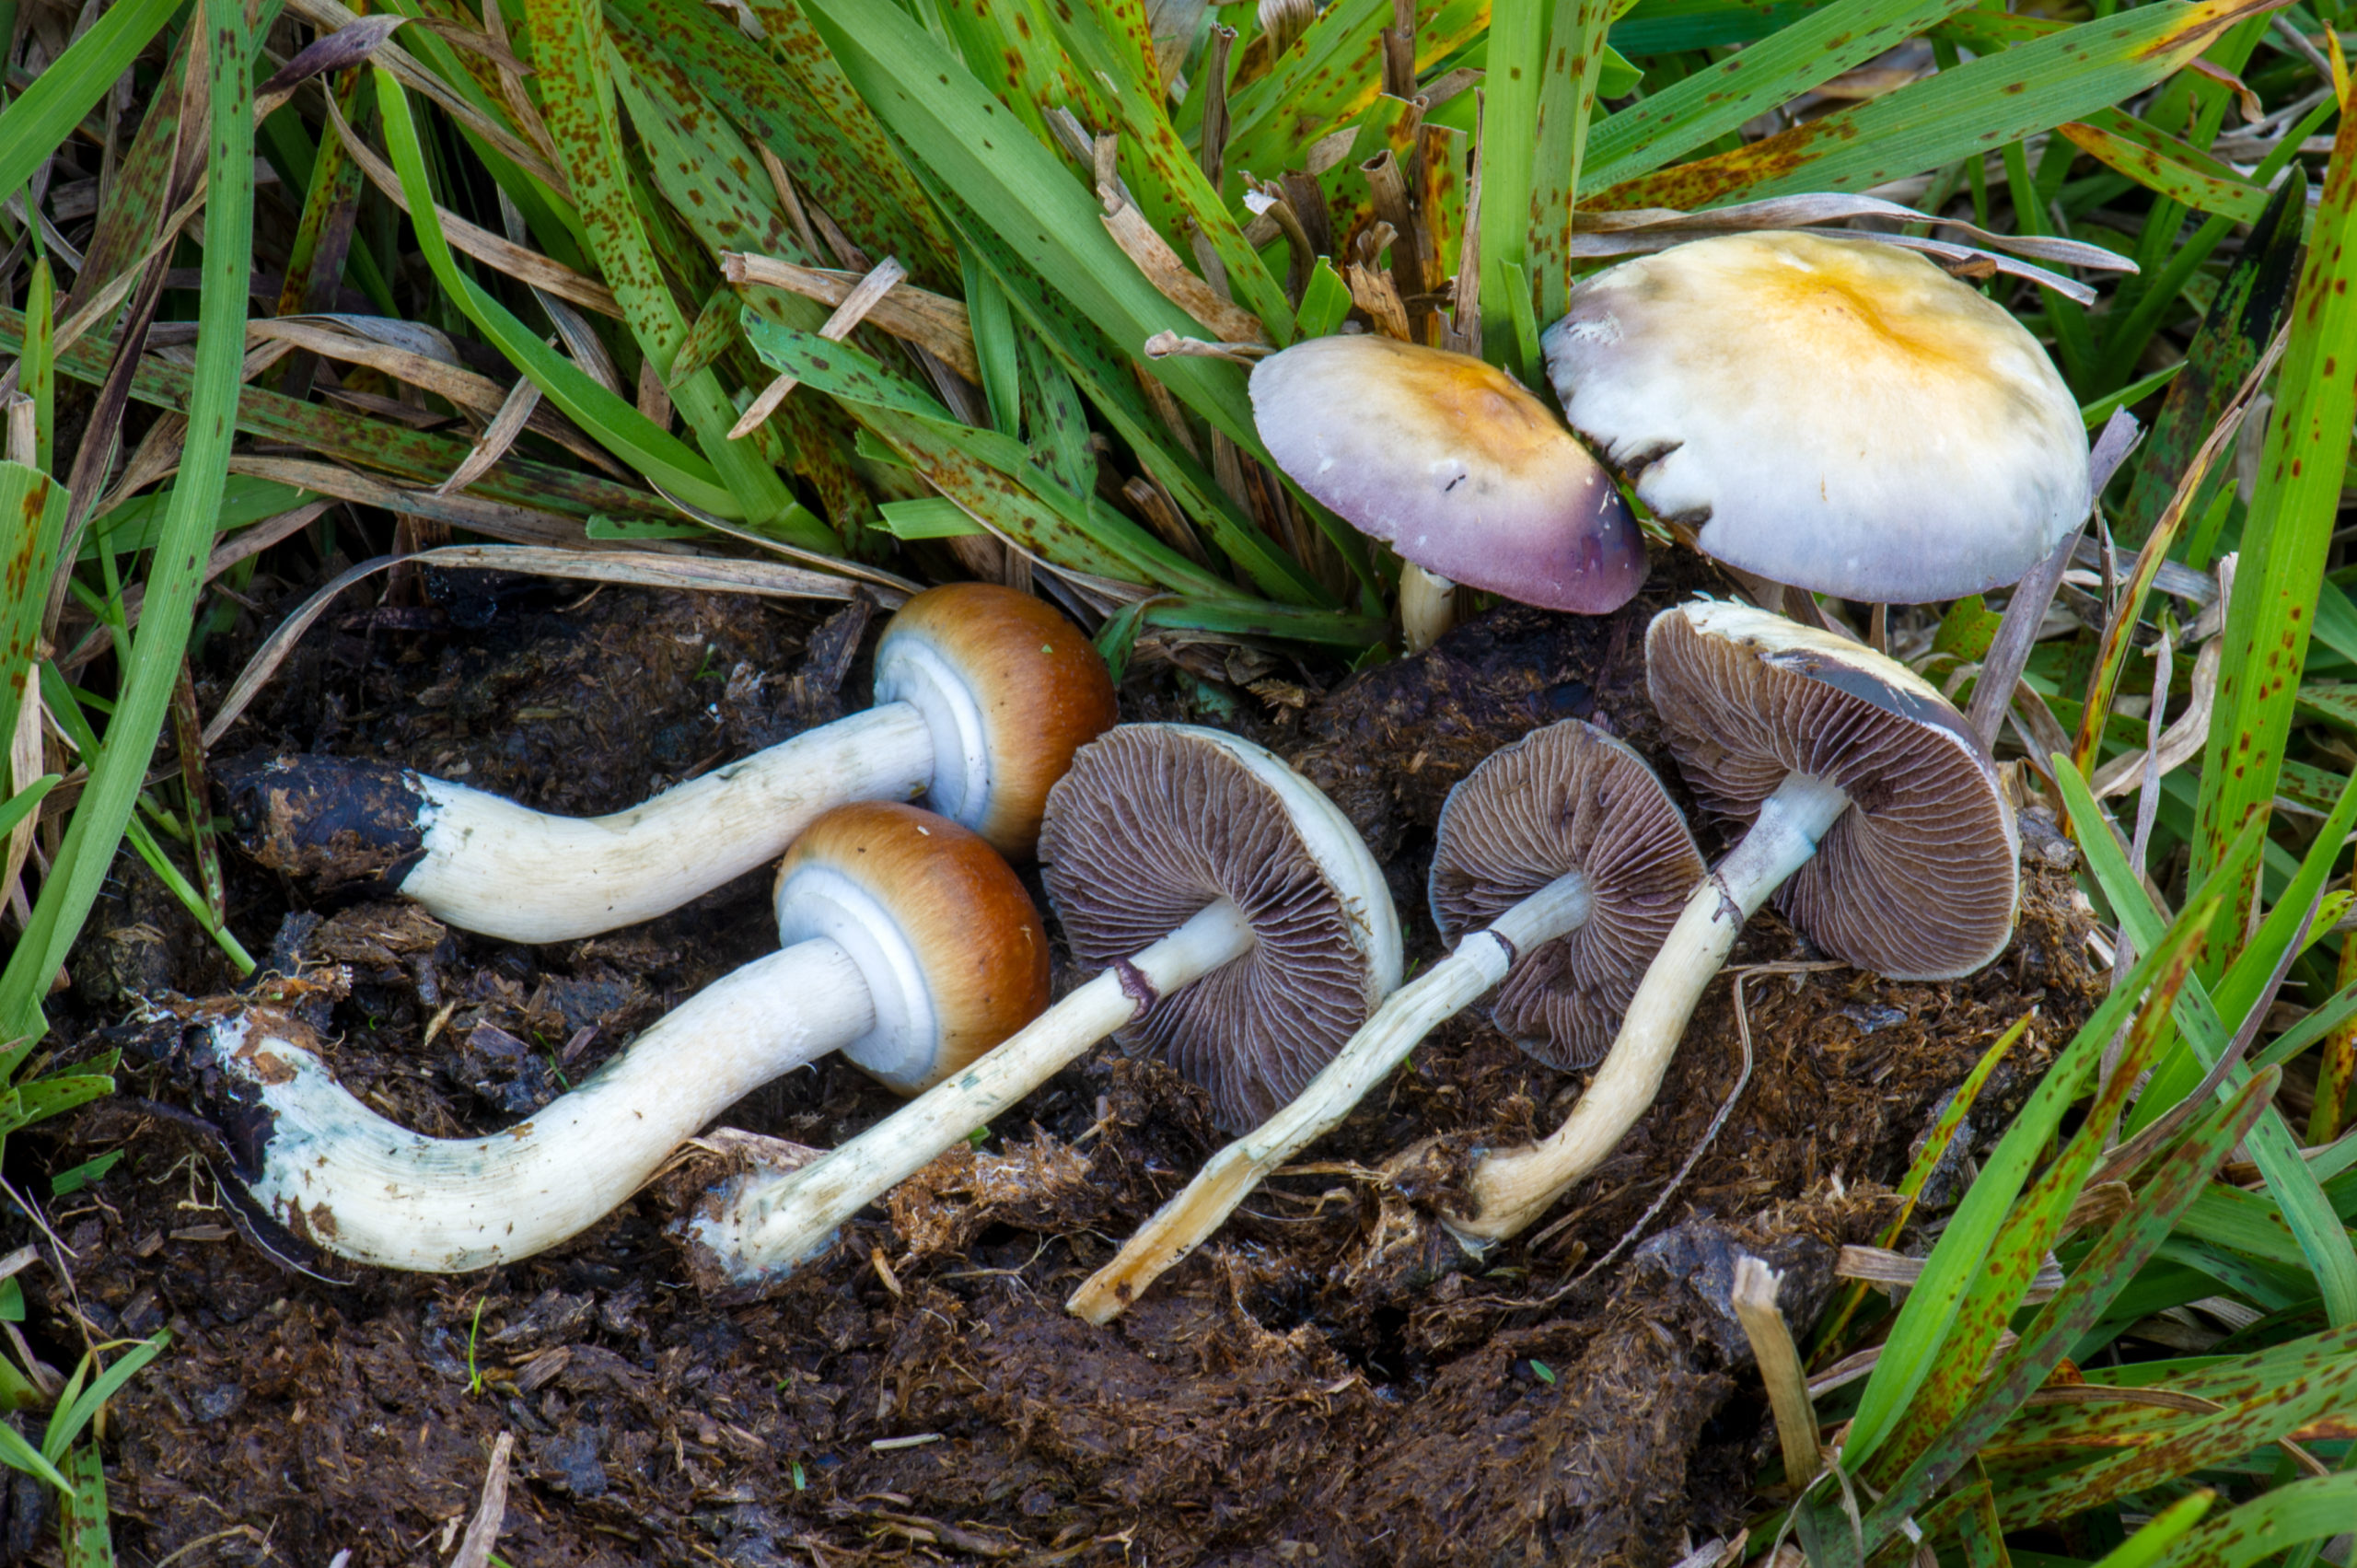 Cubensis Xalapa mushrooms in grass